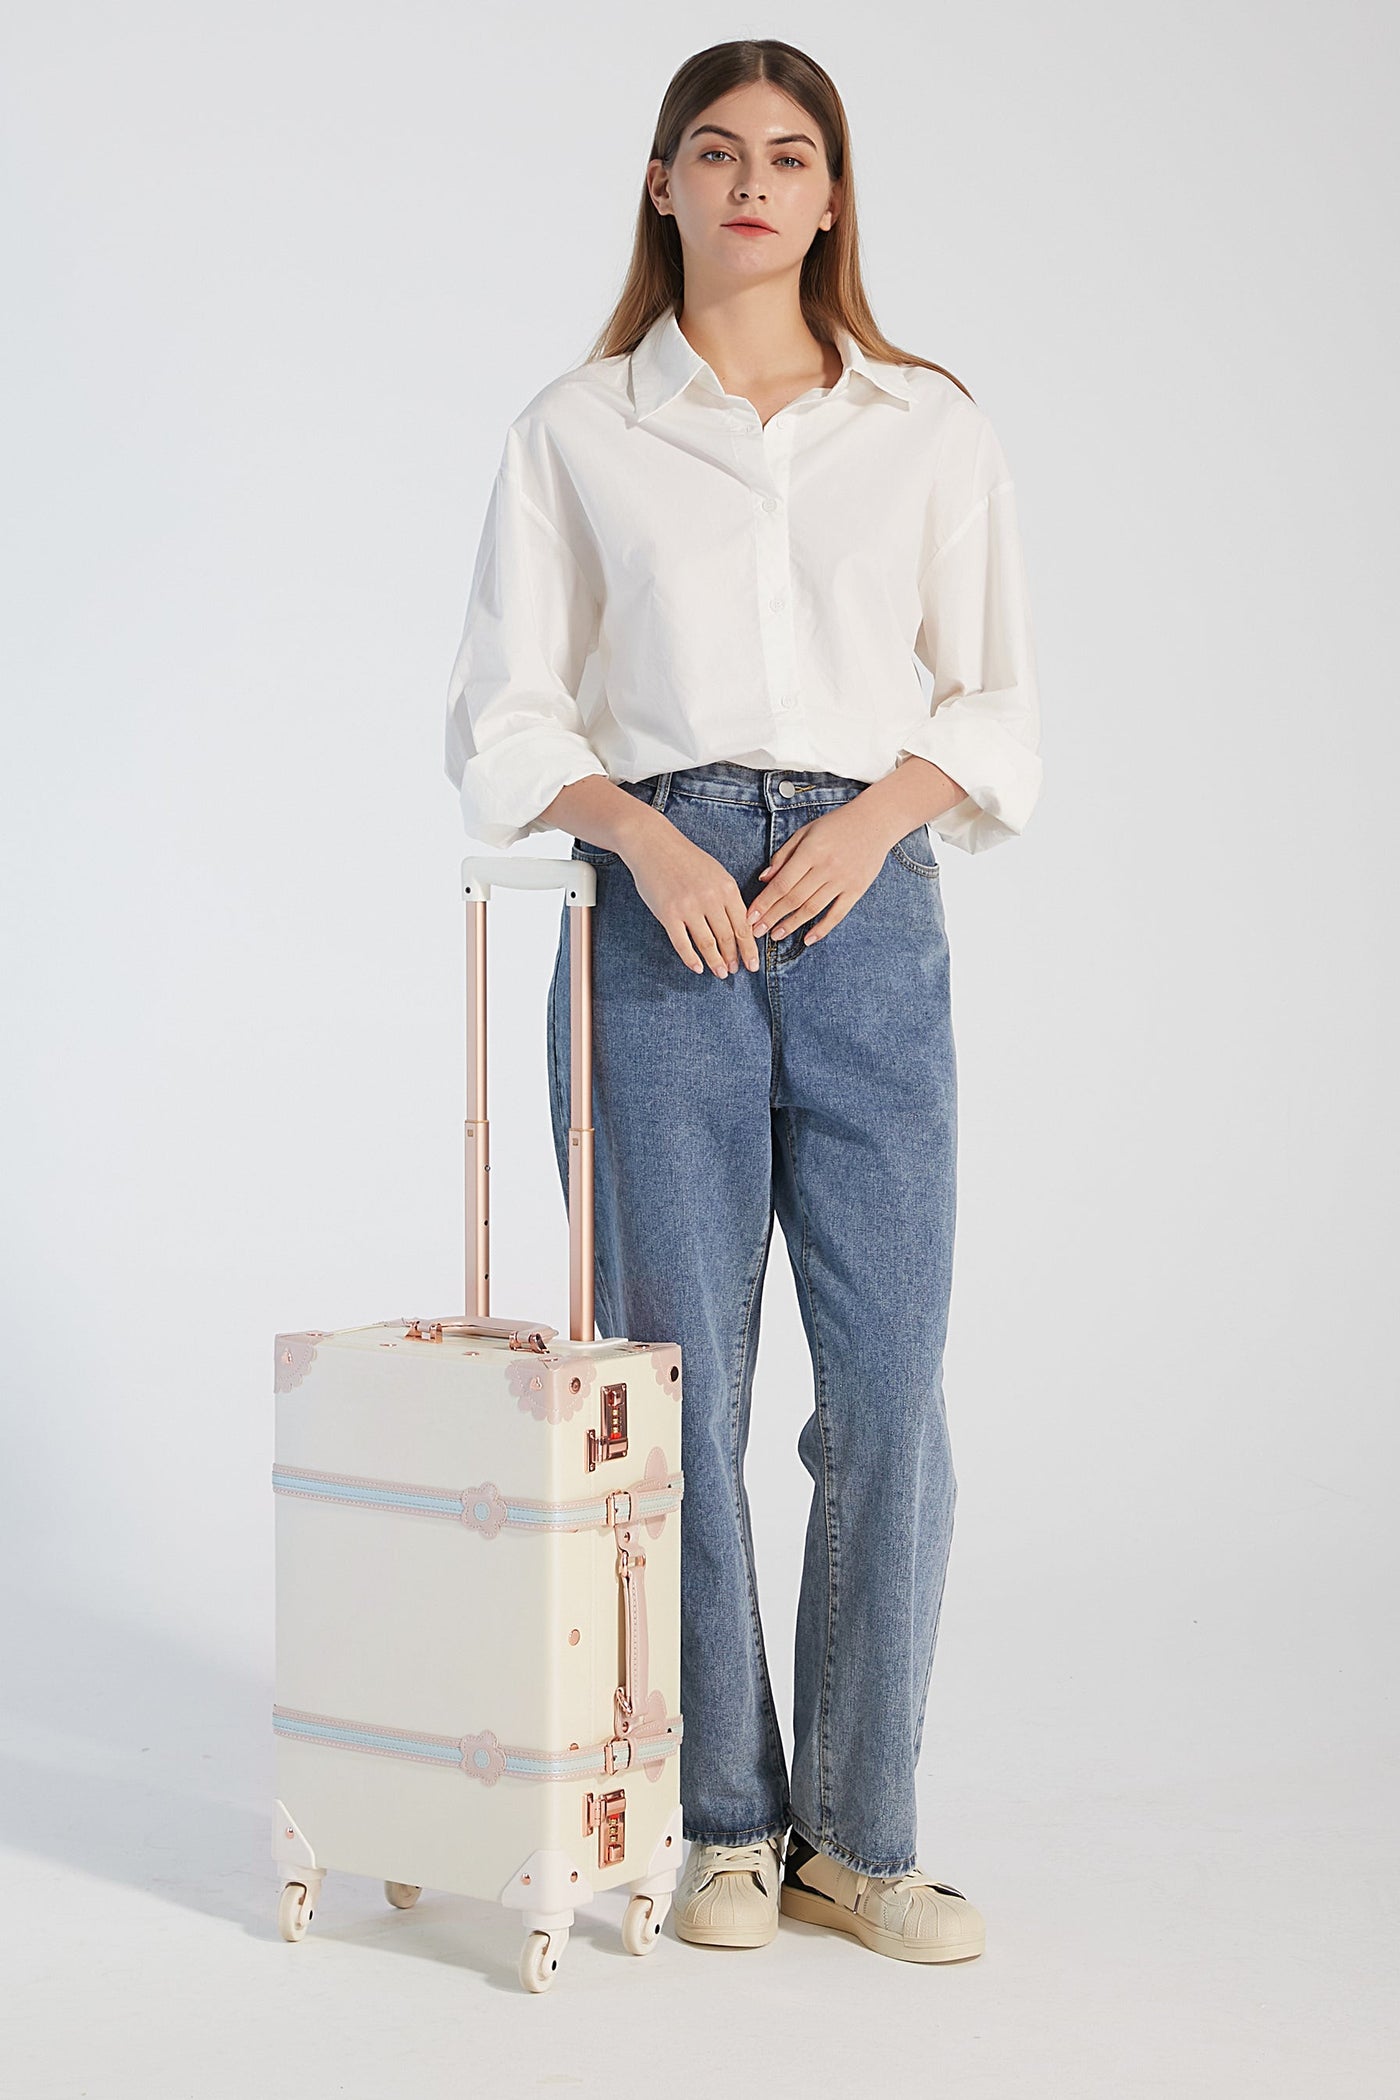 SarahFace Spinner Suitcase - Cream White's